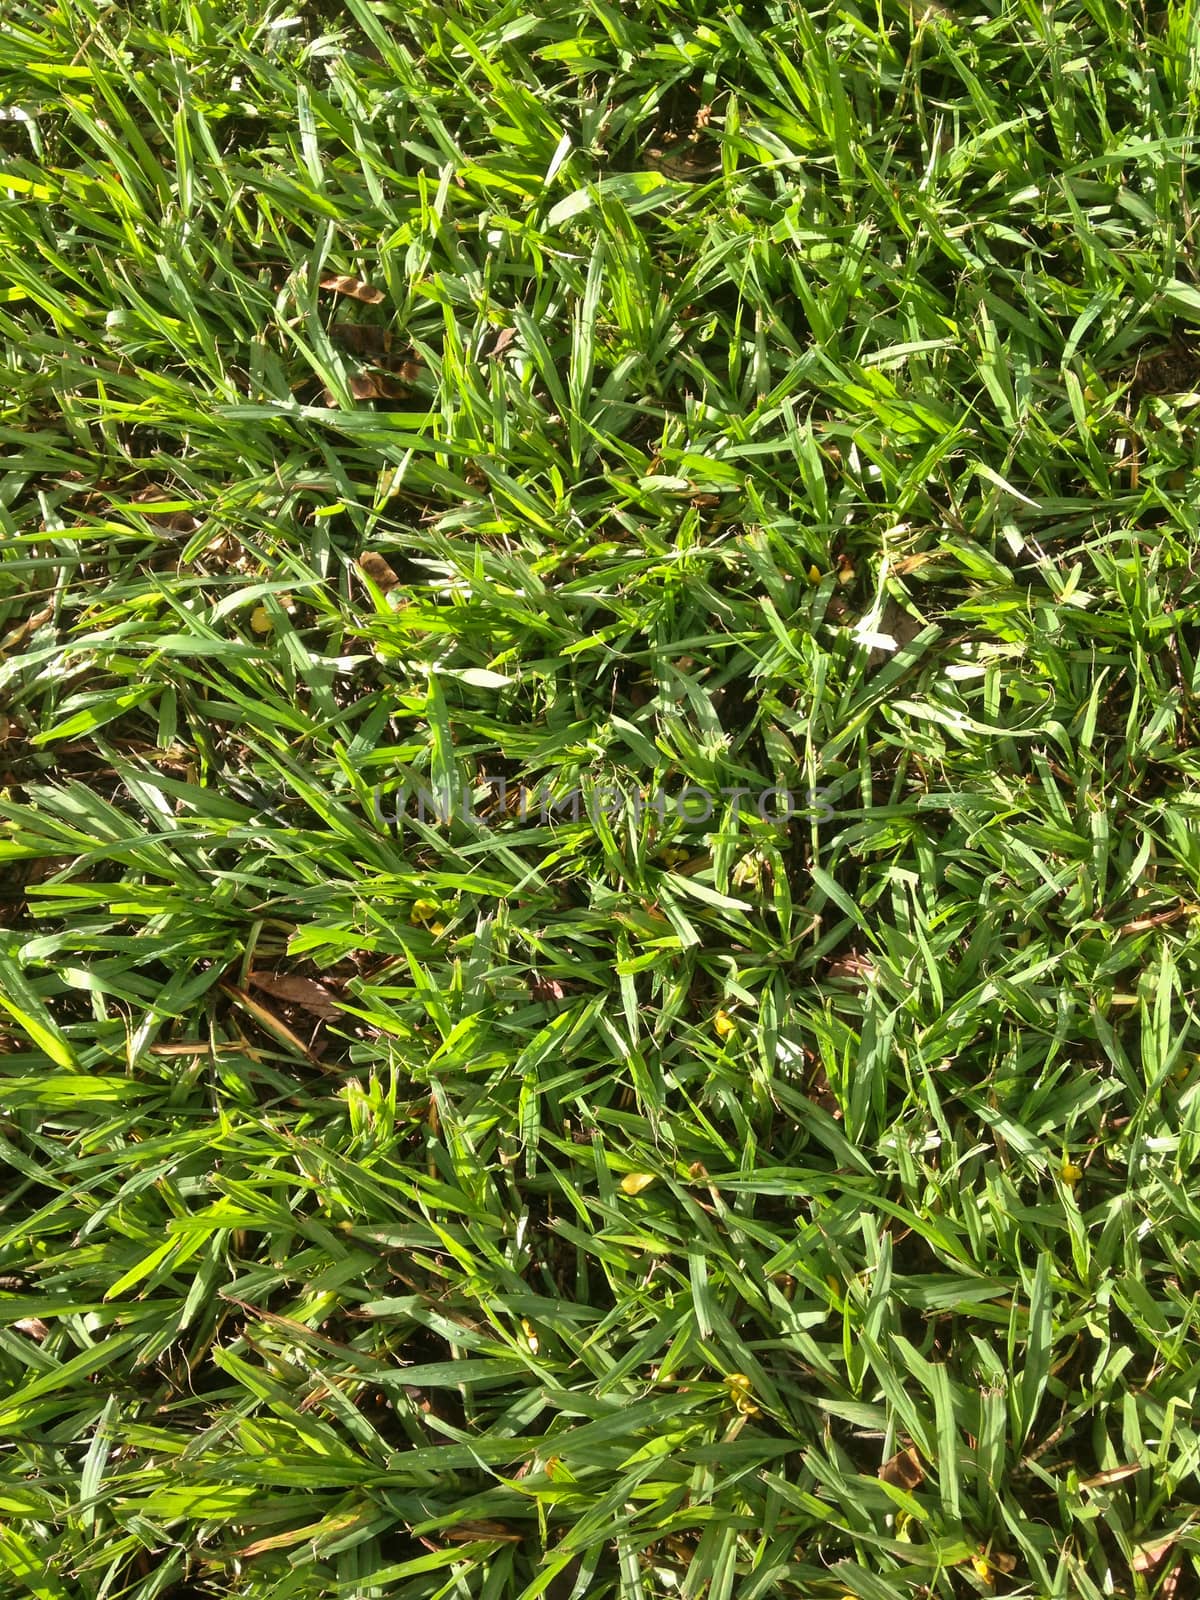 Green fresh grassy field for sport